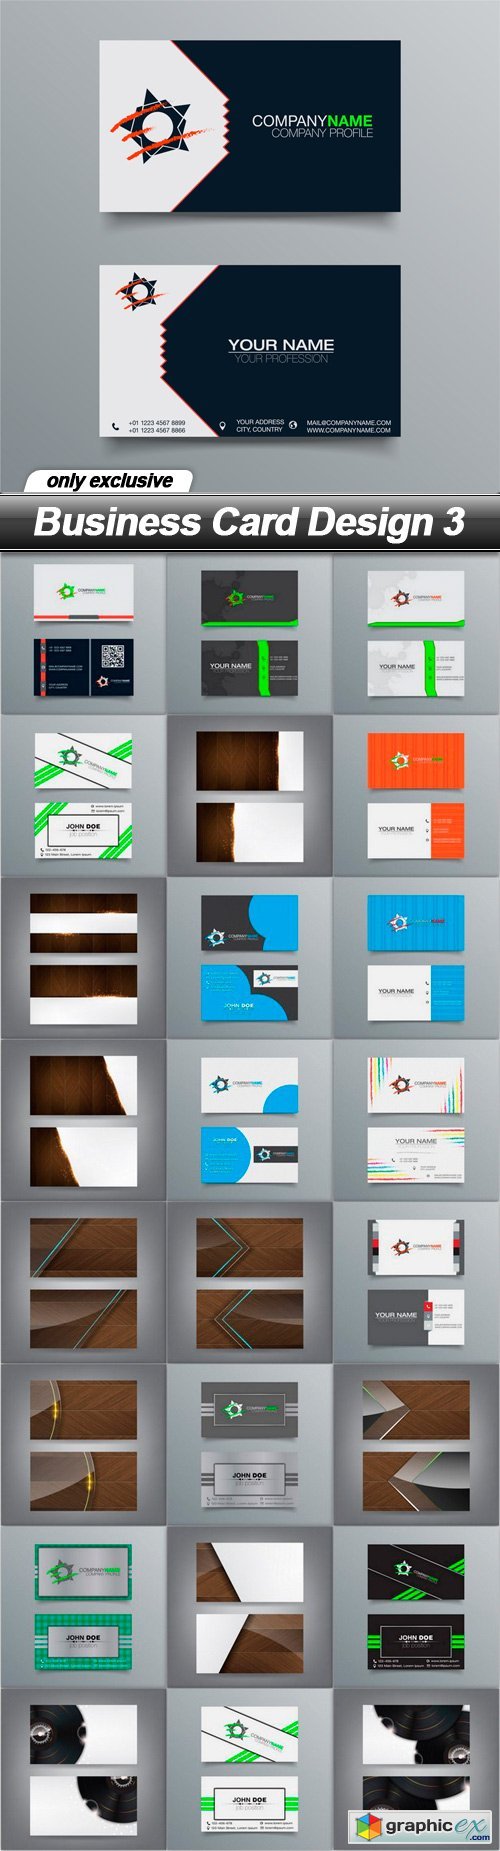 Business Card Design 3 - 25 EPS